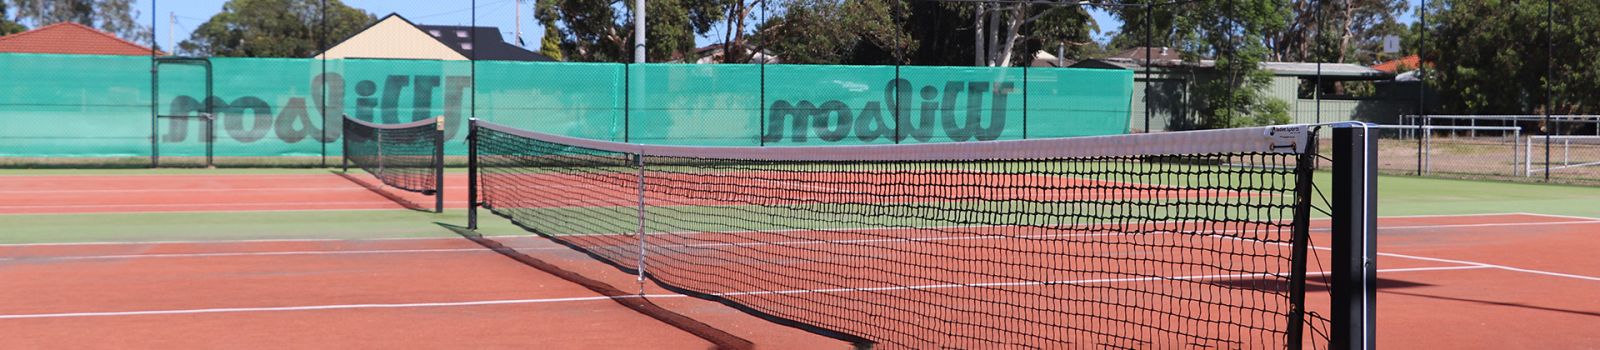 brick powder tennis court in Mallabula banner image